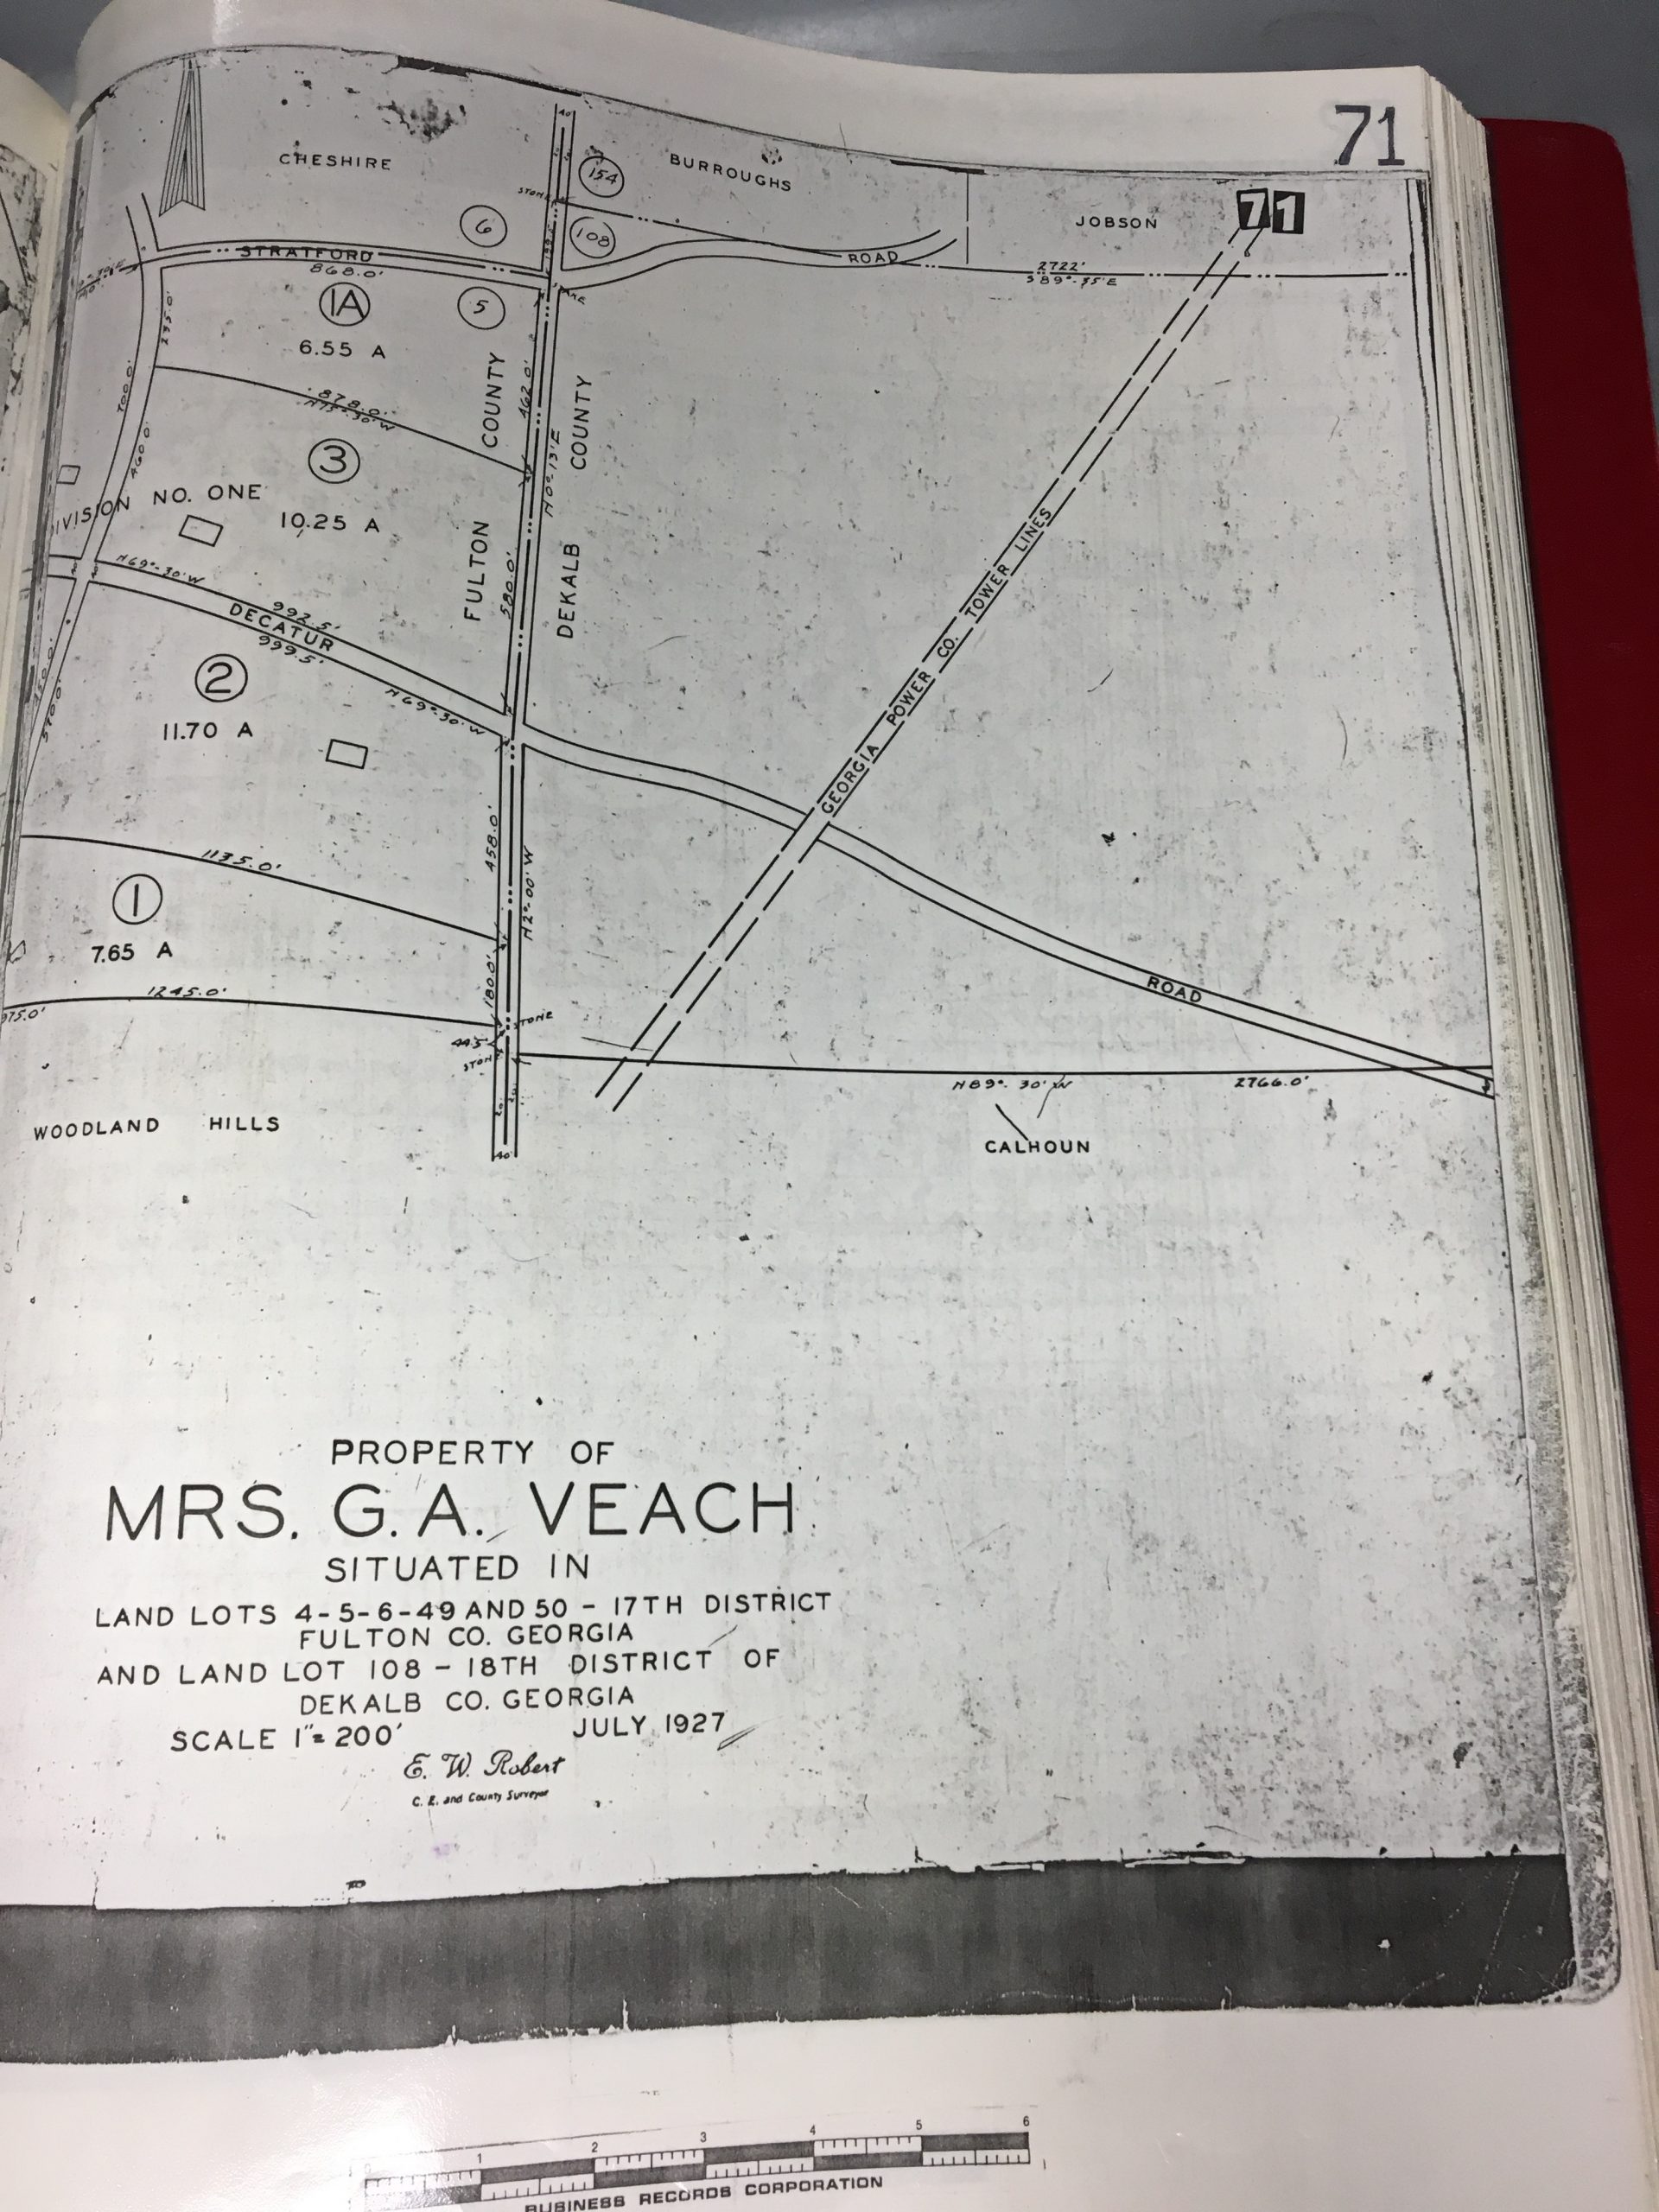 page 71 G.A. Veach 1927 Land Lot 4, 5, 49 Fulton Co. & Land Lot 108 Dekalb Co.